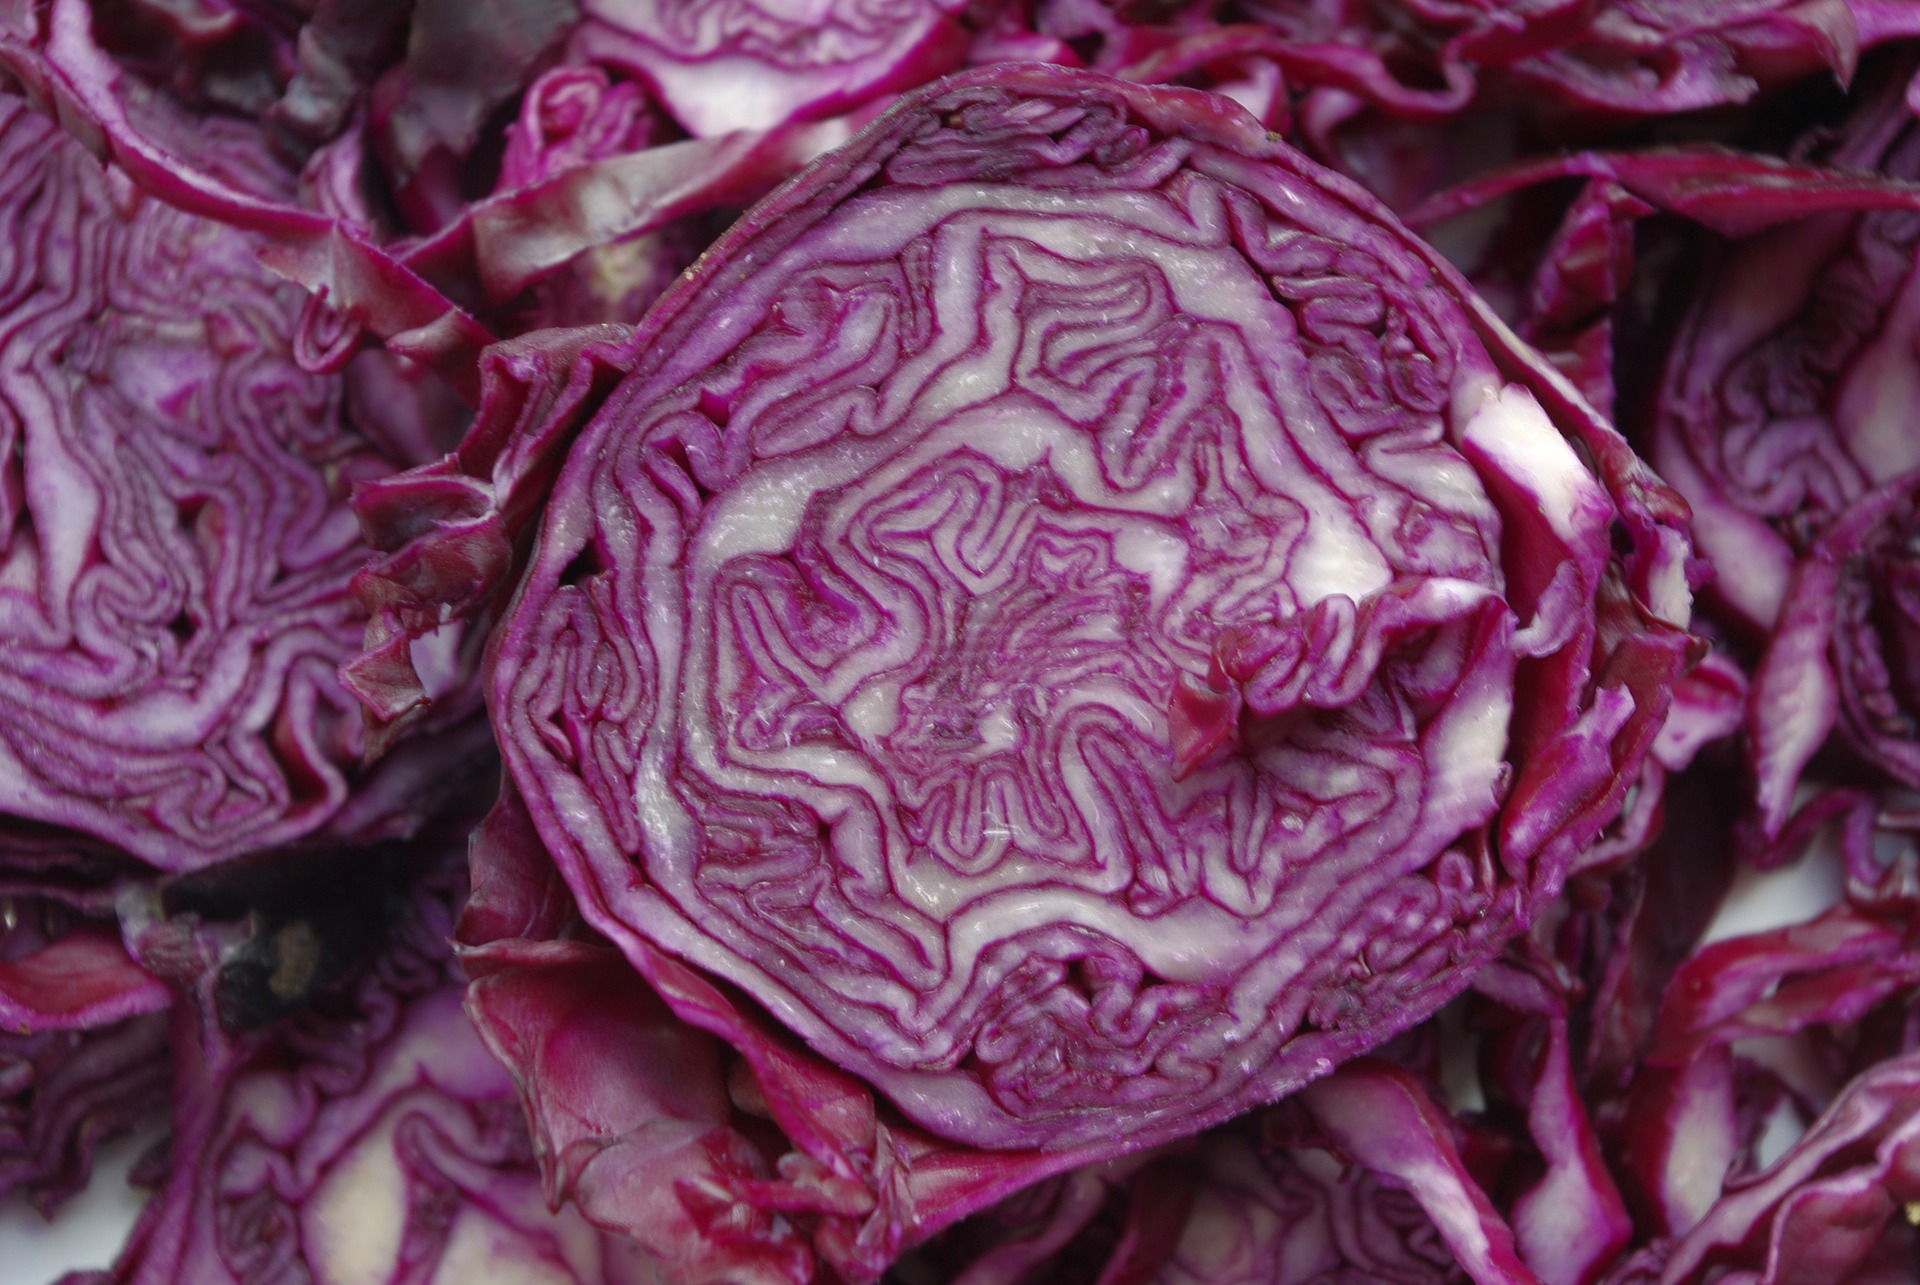 Cabbage photo